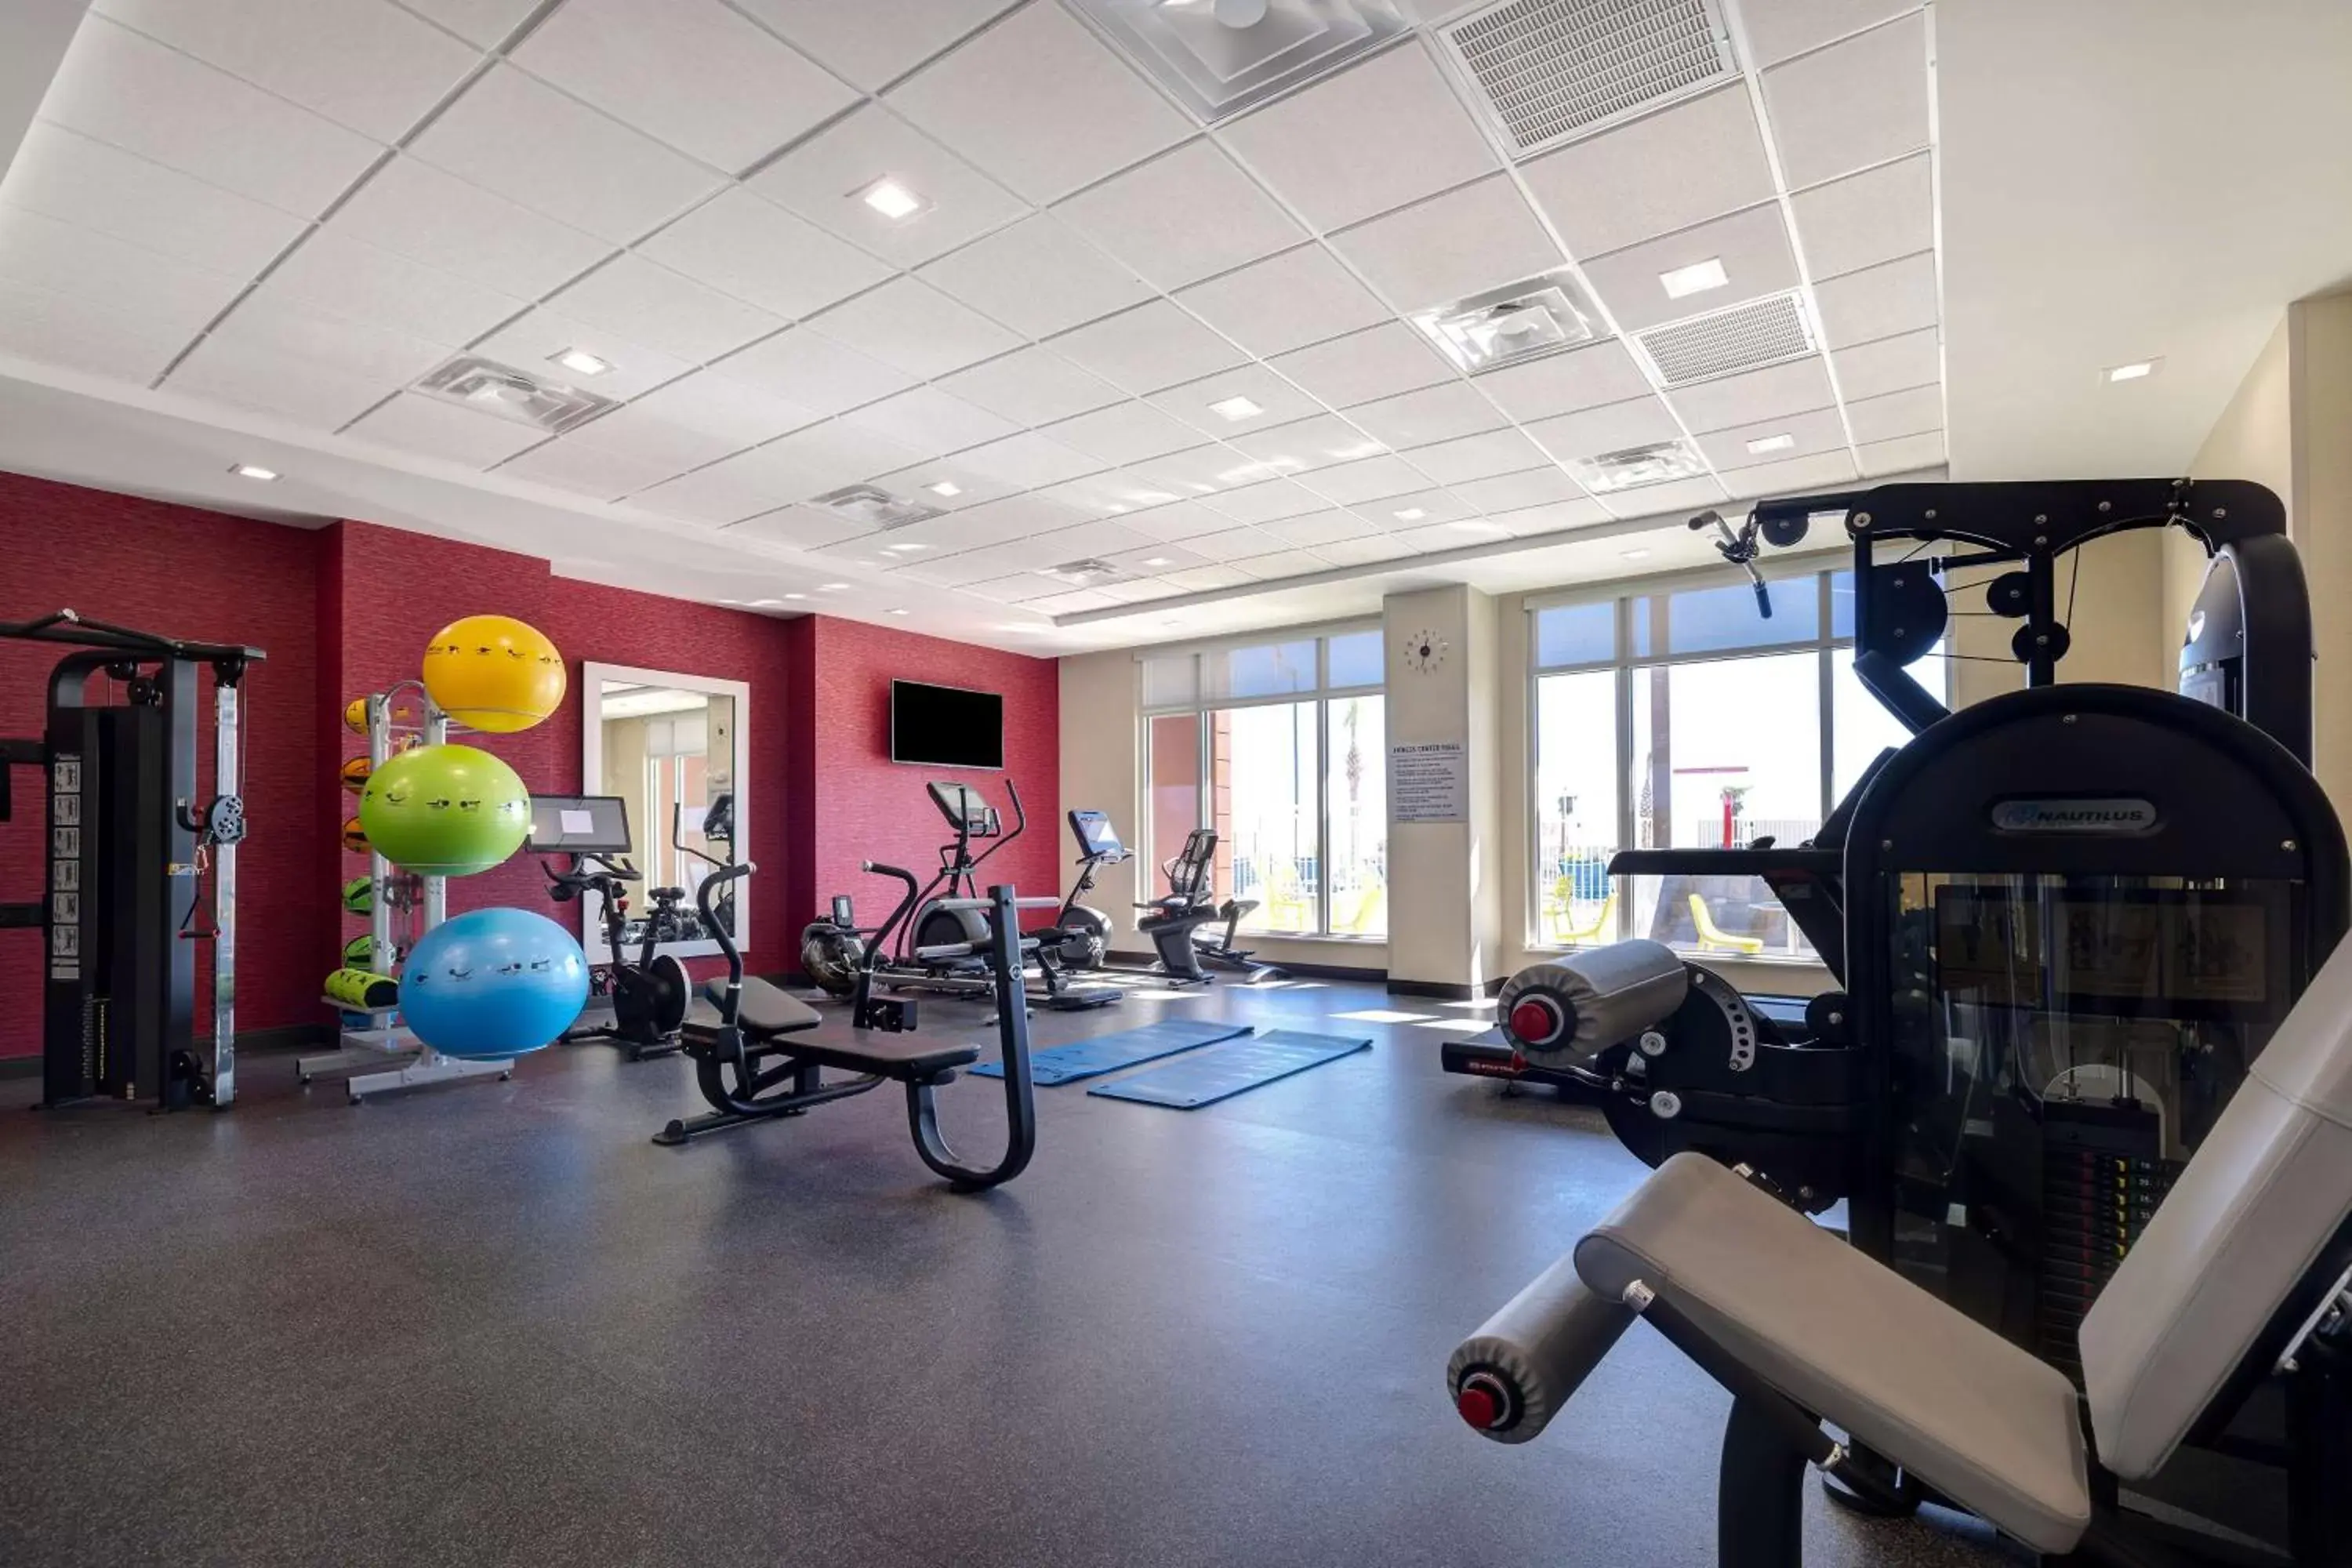 Fitness centre/facilities, Fitness Center/Facilities in Tru By Hilton Galveston, Tx